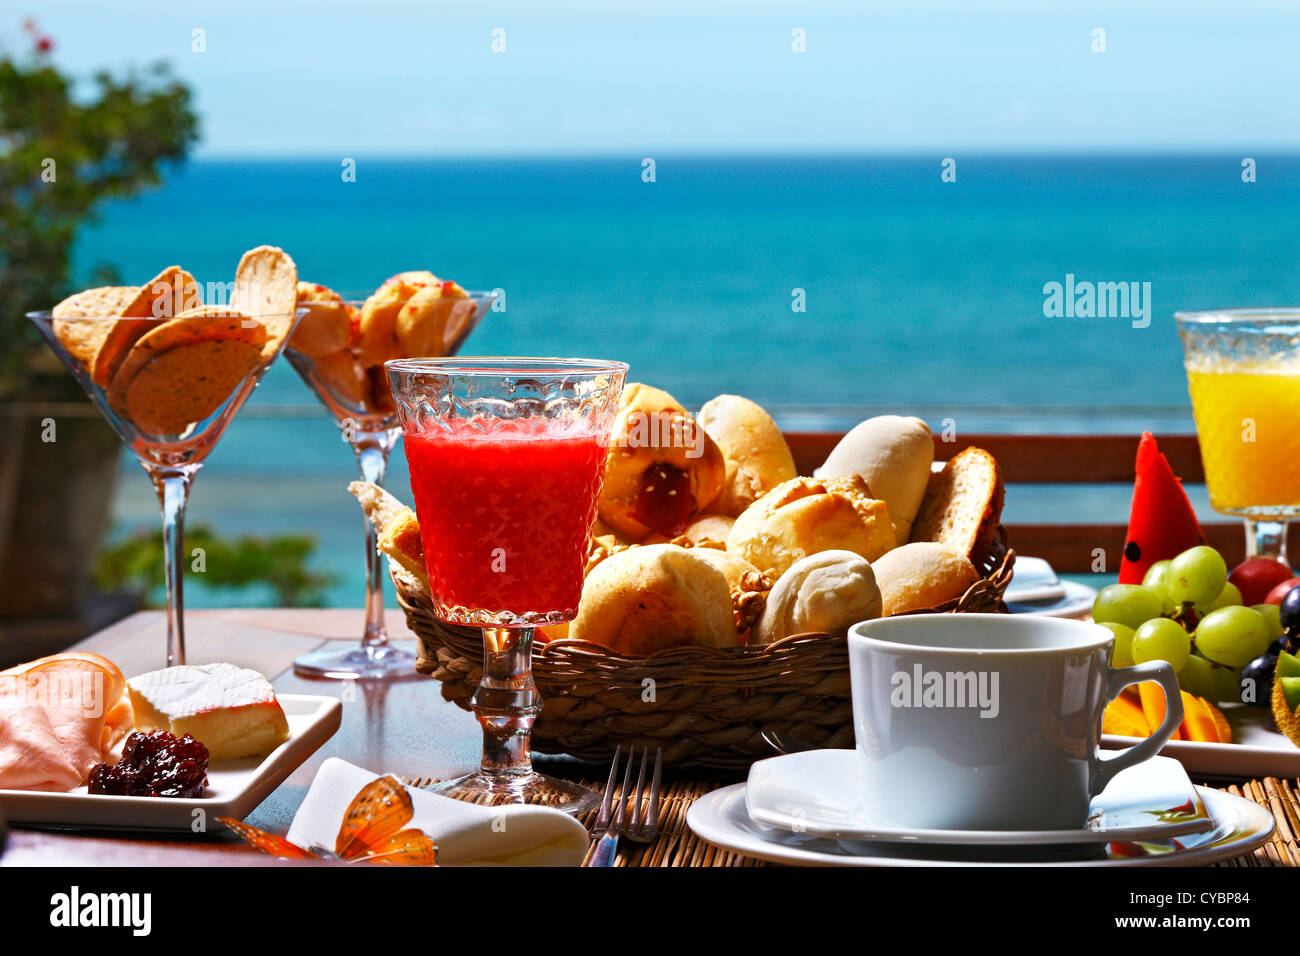 Breakfast on the beach Stock Photo - Alamy